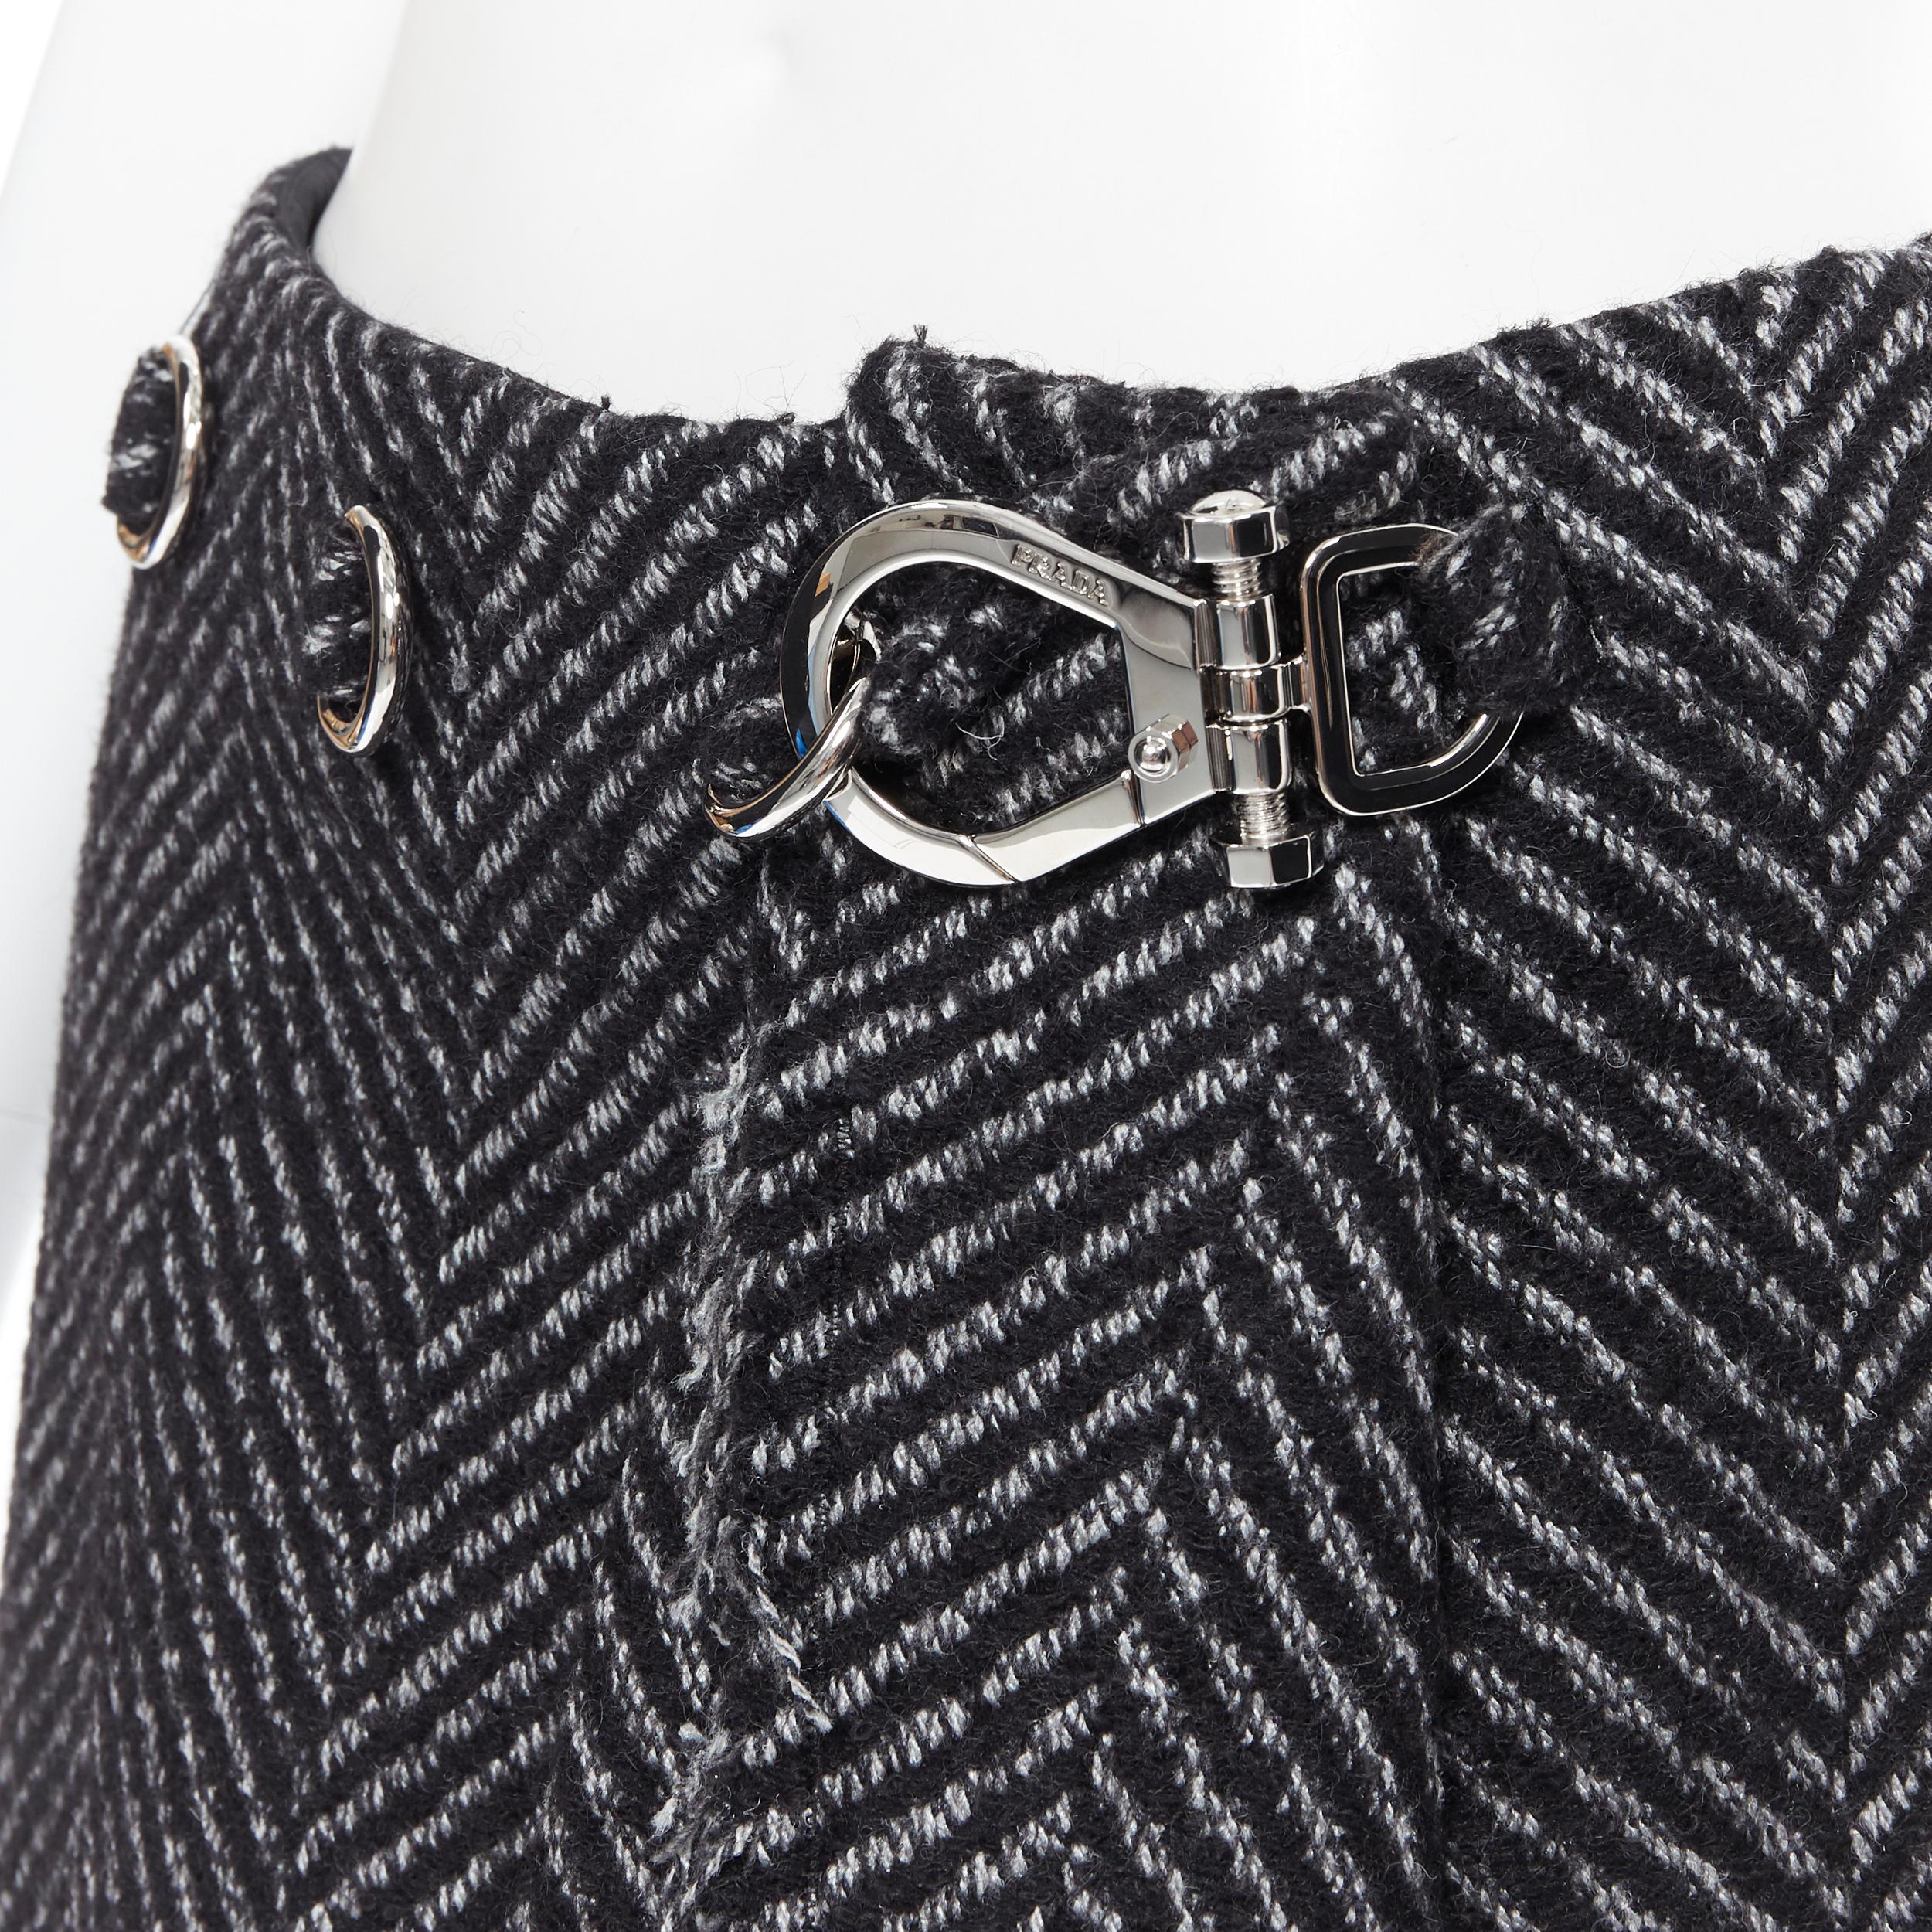 new PRADA 2019 Runway grey chevon wool tweed frayed metal clasp skirt IT38 XS
Brand: Prada
Designer: Miuccia Prada
Collection: Fall Winter 2019
Model Name / Style: Wool skirt
Material: Wool
Color: Grey
Pattern: Solid
Closure: Clasp
Extra Detail: